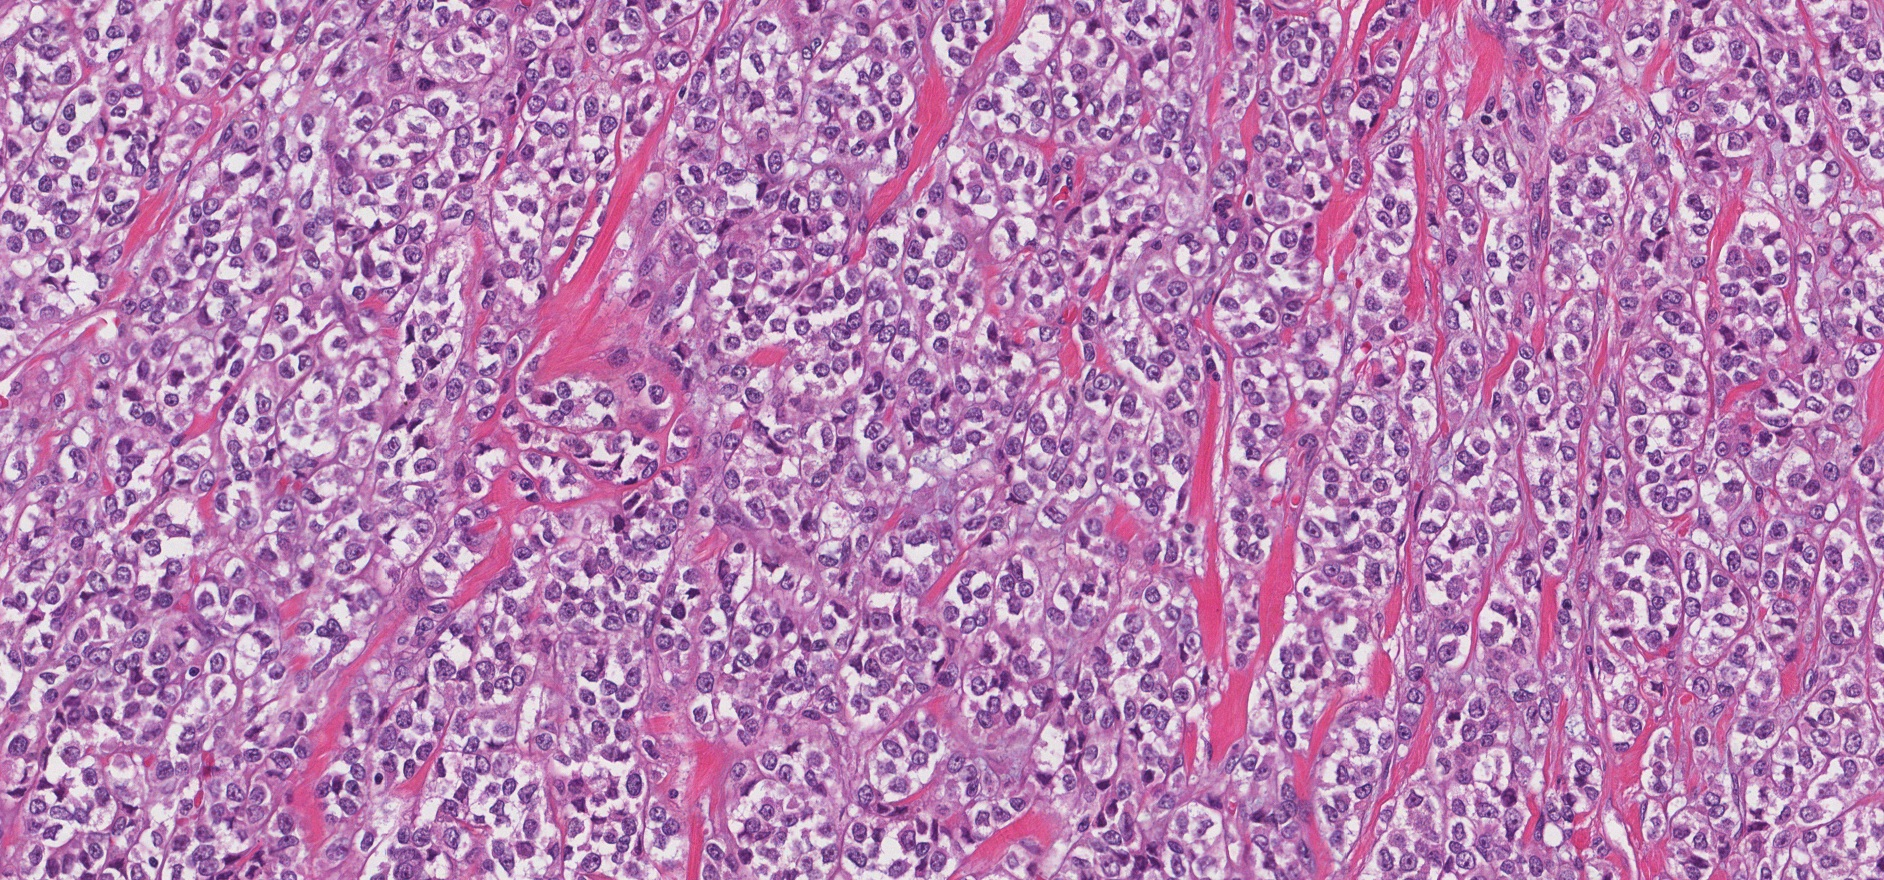 Myoepithelial carcinoma of the salivary glands